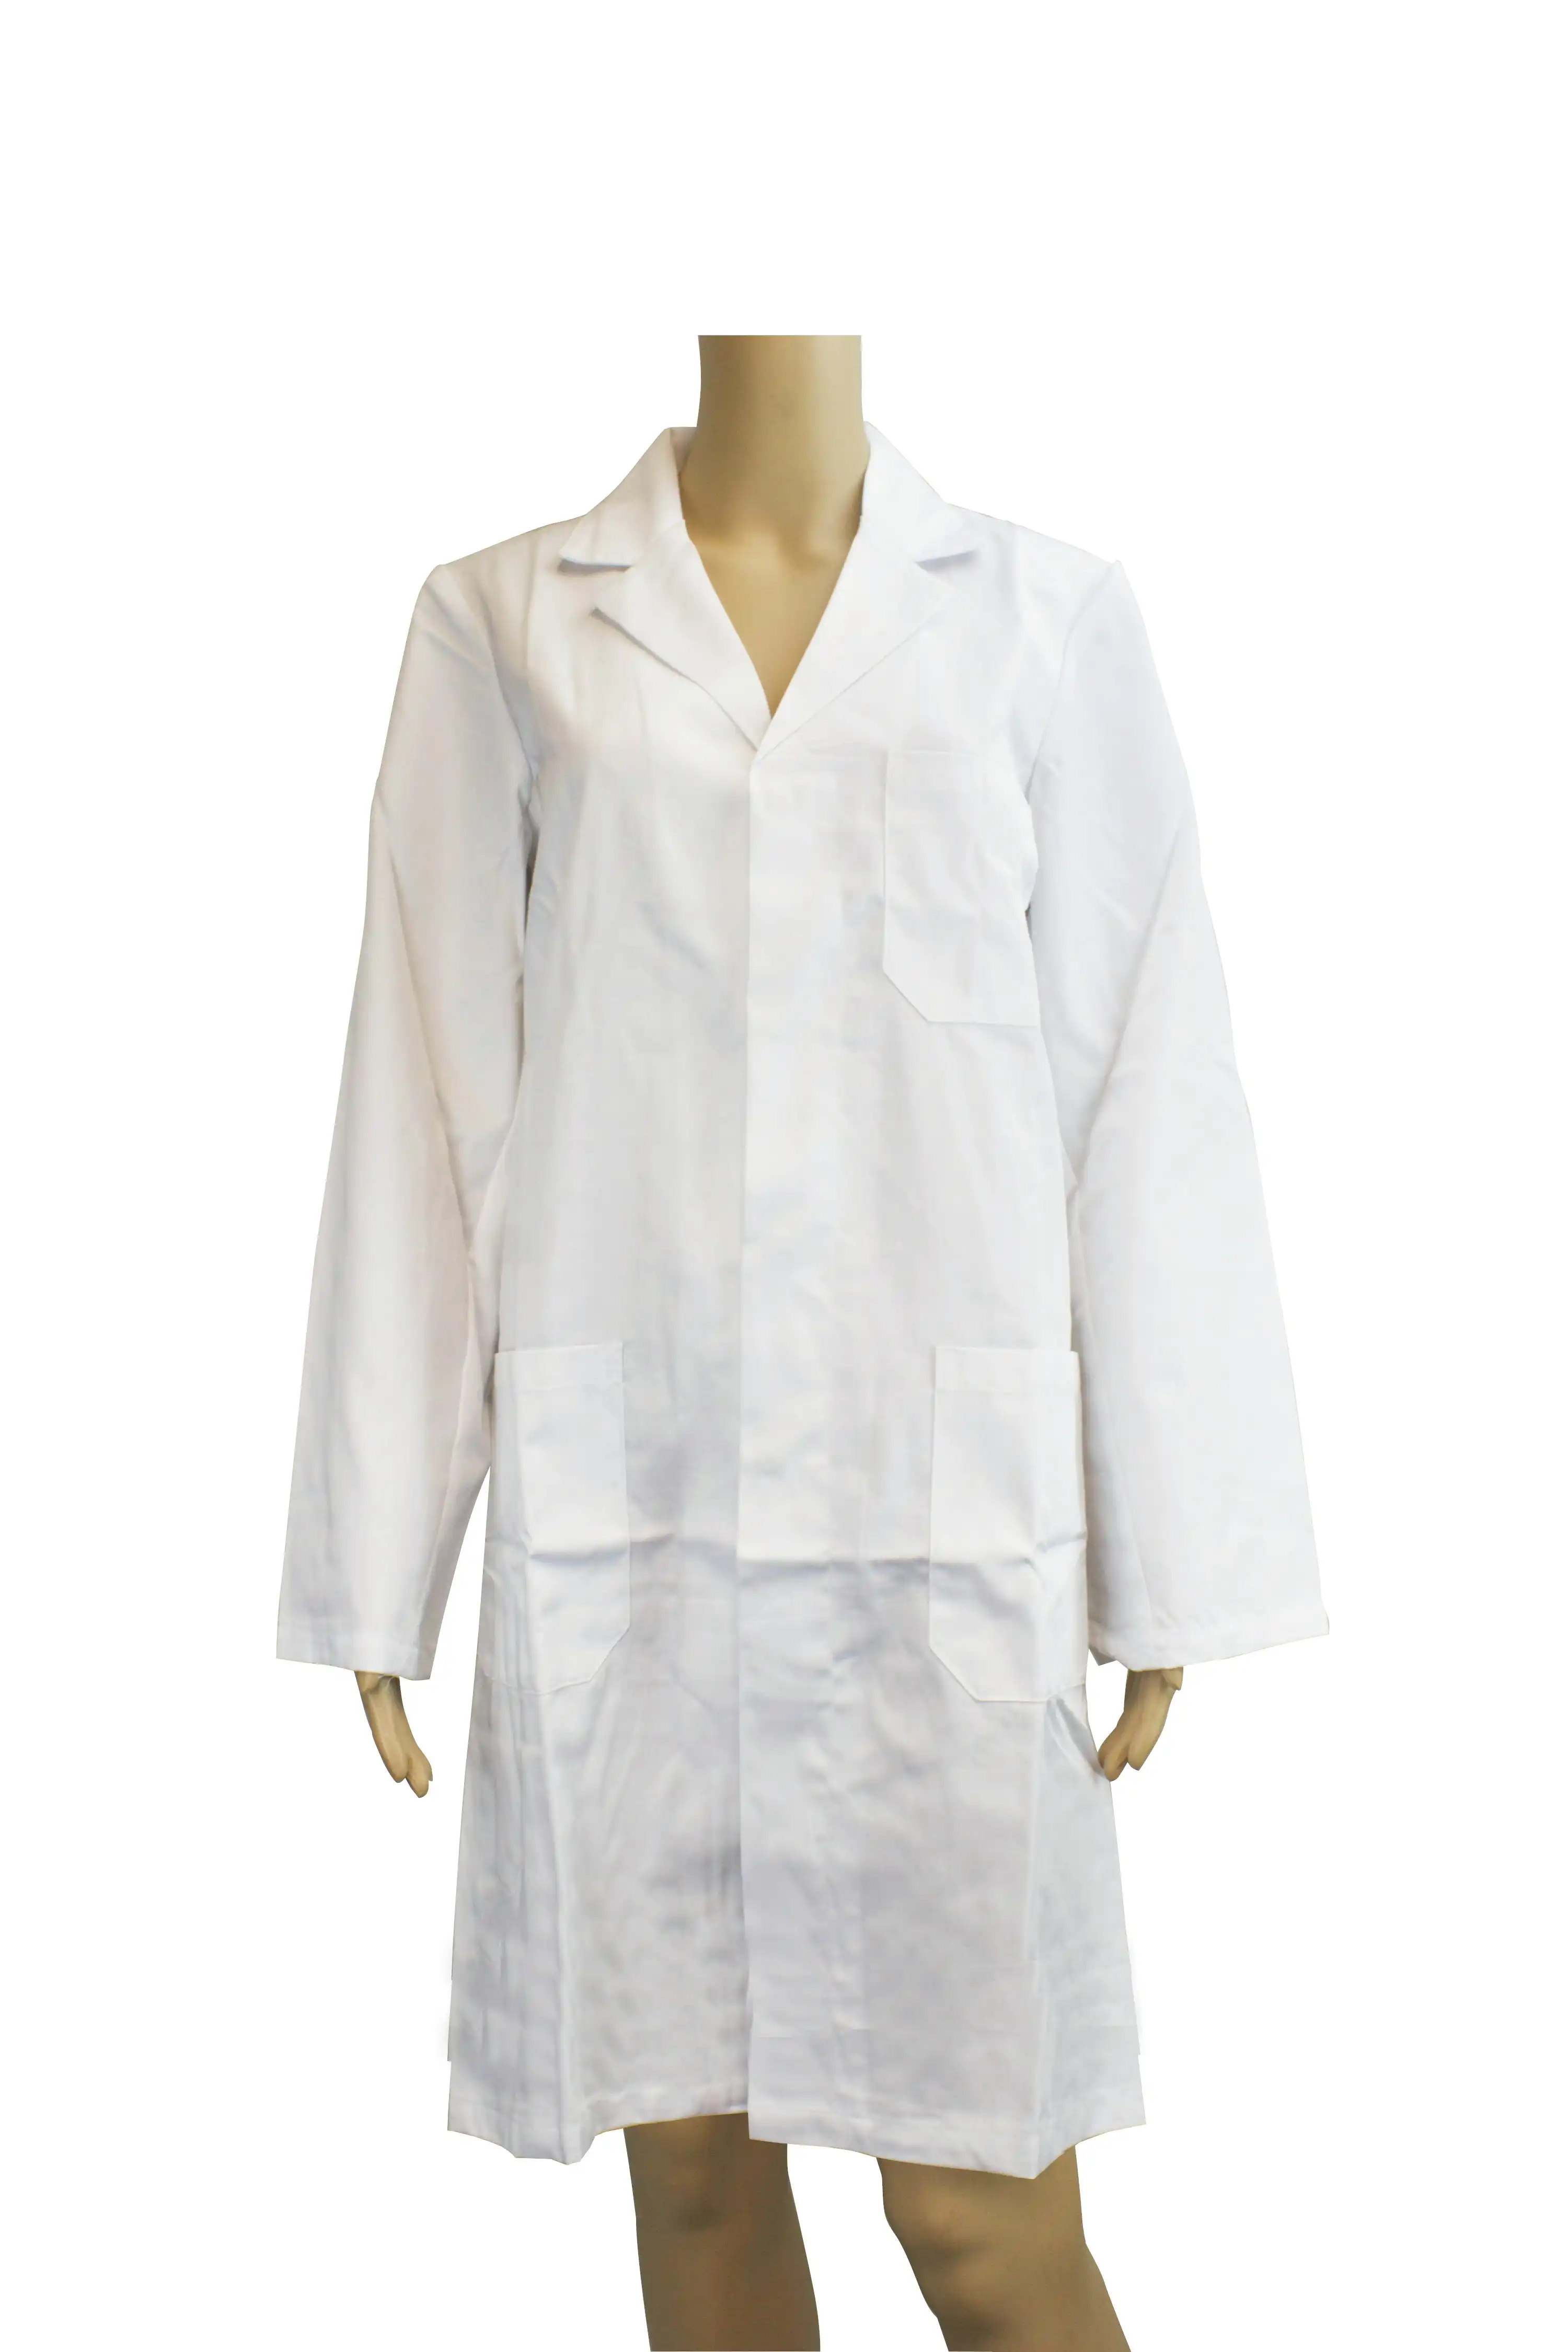 Livingstone Laboratory Coat with Press Stud Fastenings Small (Male 92, Female 14) White